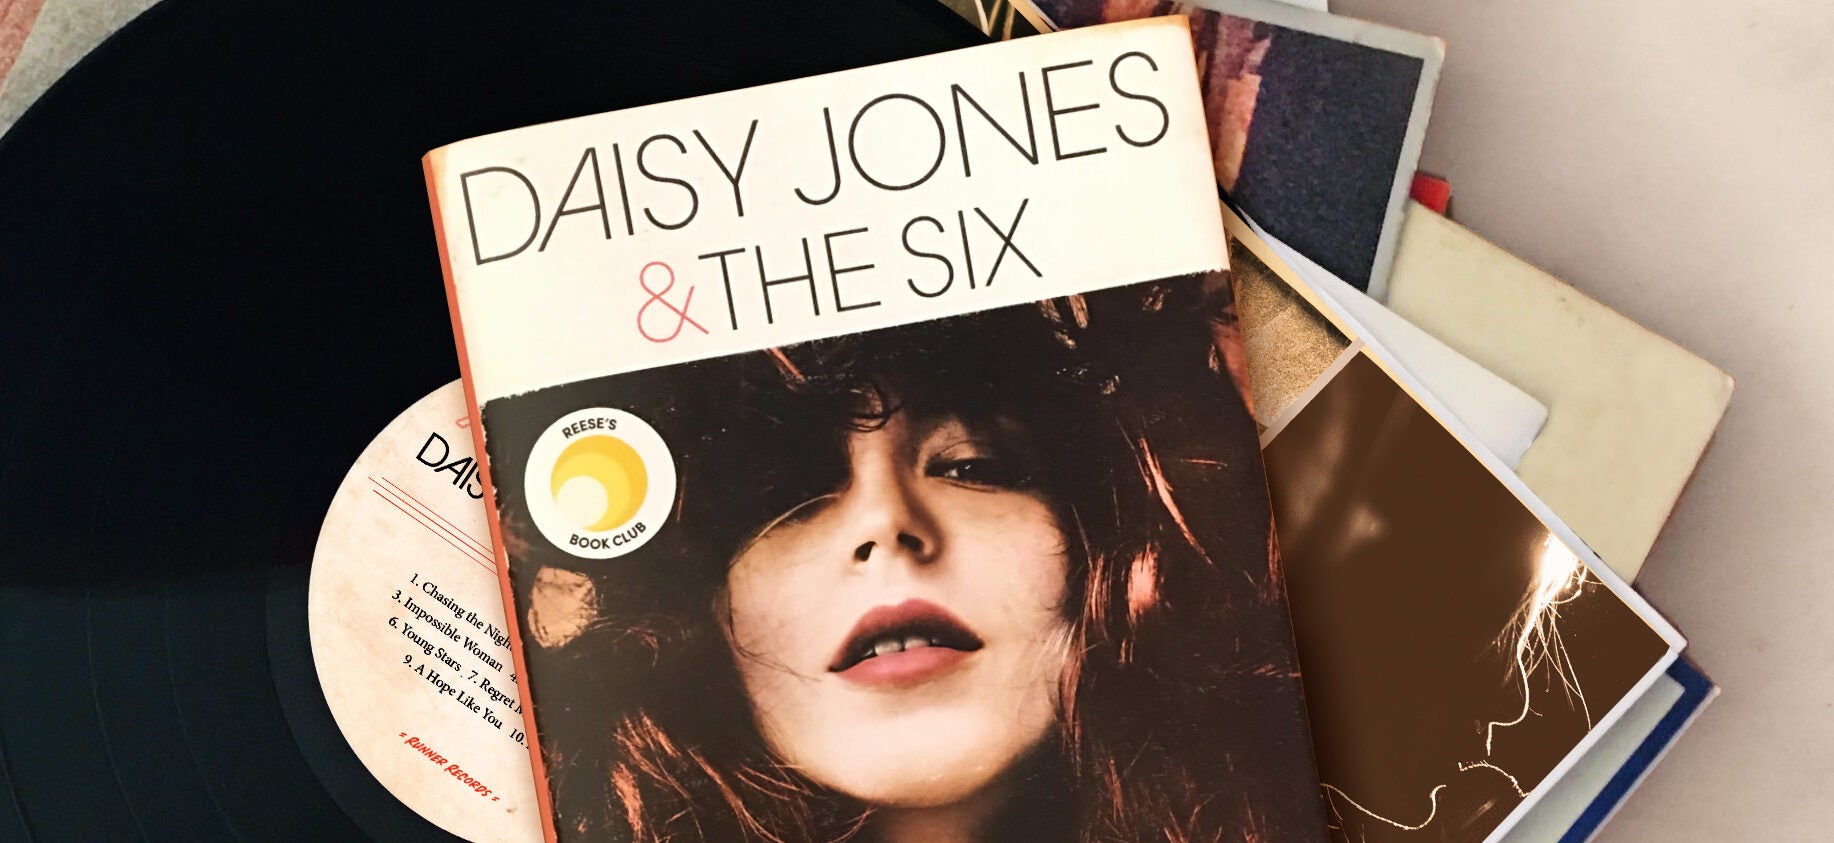 Watch Now on Prime: Daisy Jones & The Six